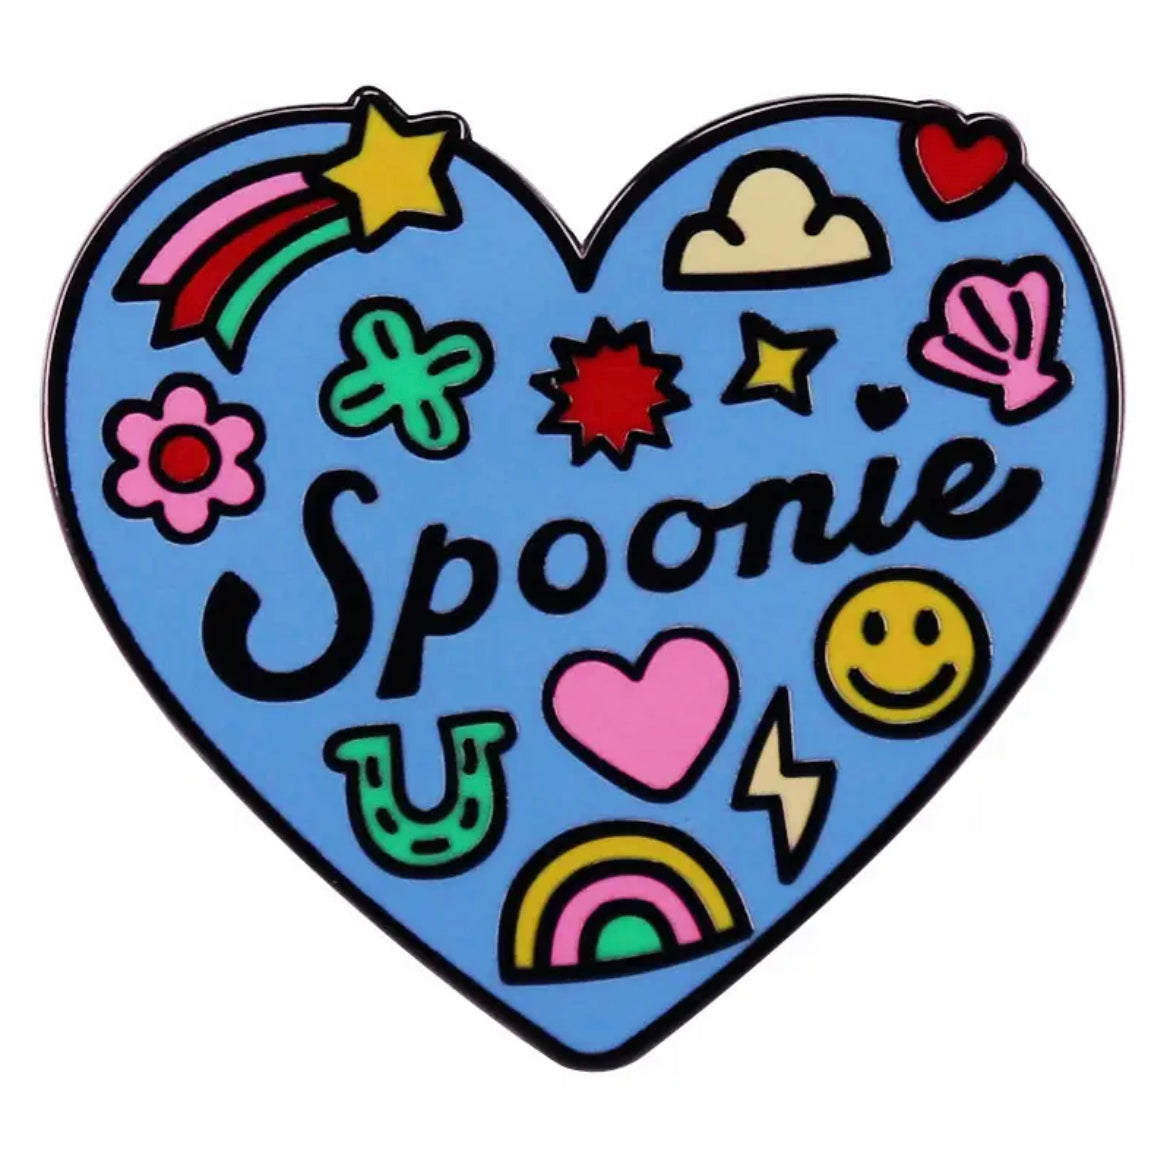 Pin —  ‘Spoonie’ for Chronic Illness Awareness